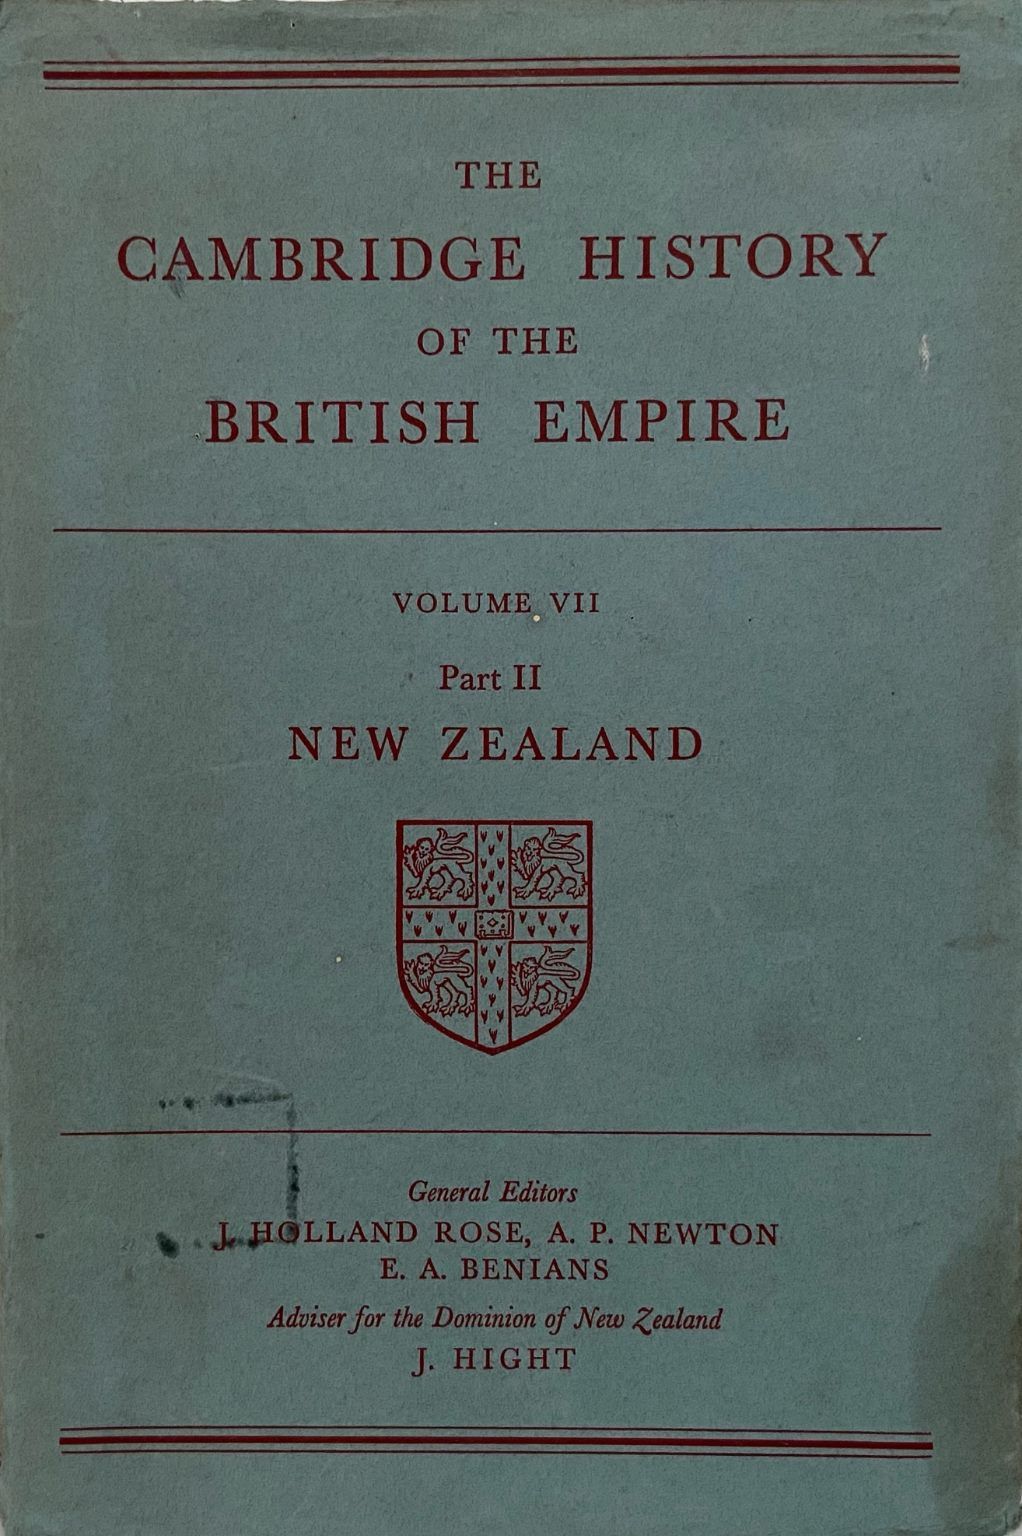 THE CAMBRIDGE HISTORY OF THE BRITISH EMPIRE: Volume VII Part II New Zealand